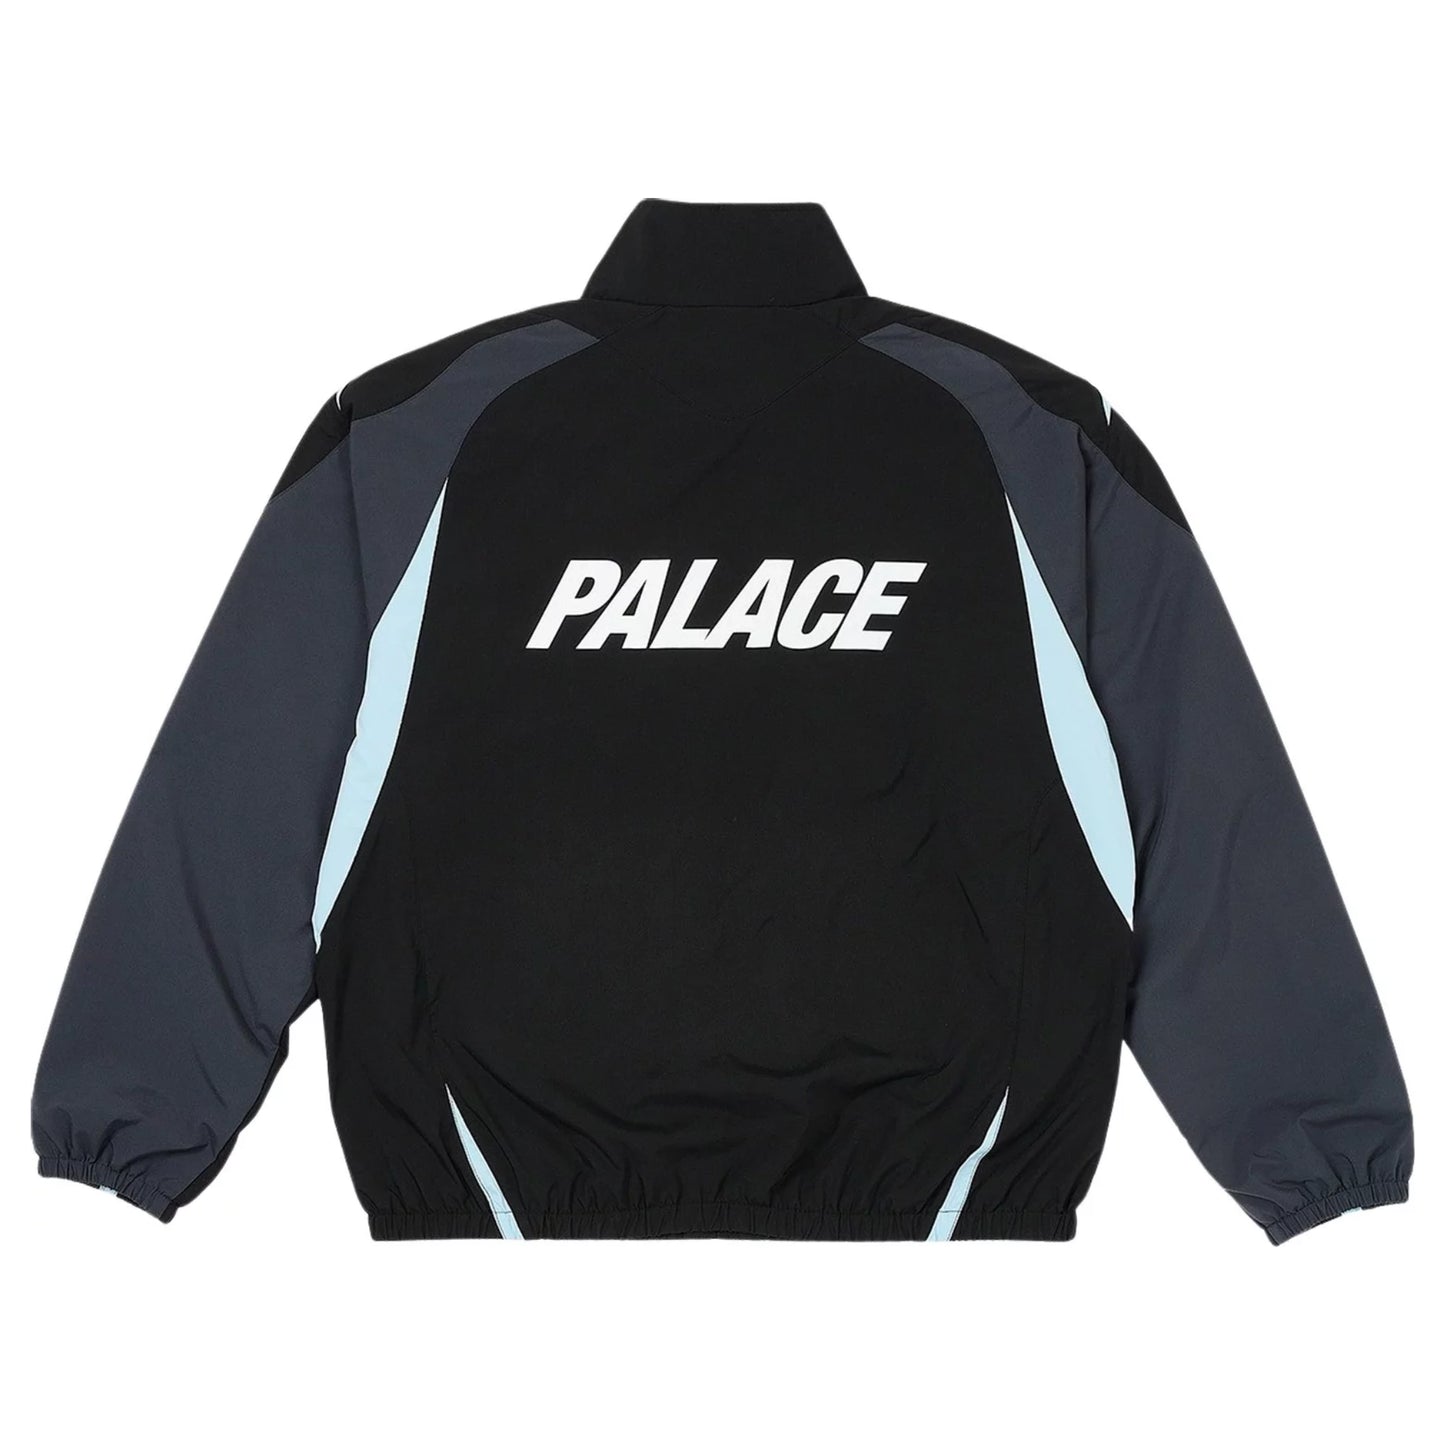 Palace Pro Shell Jacket Black